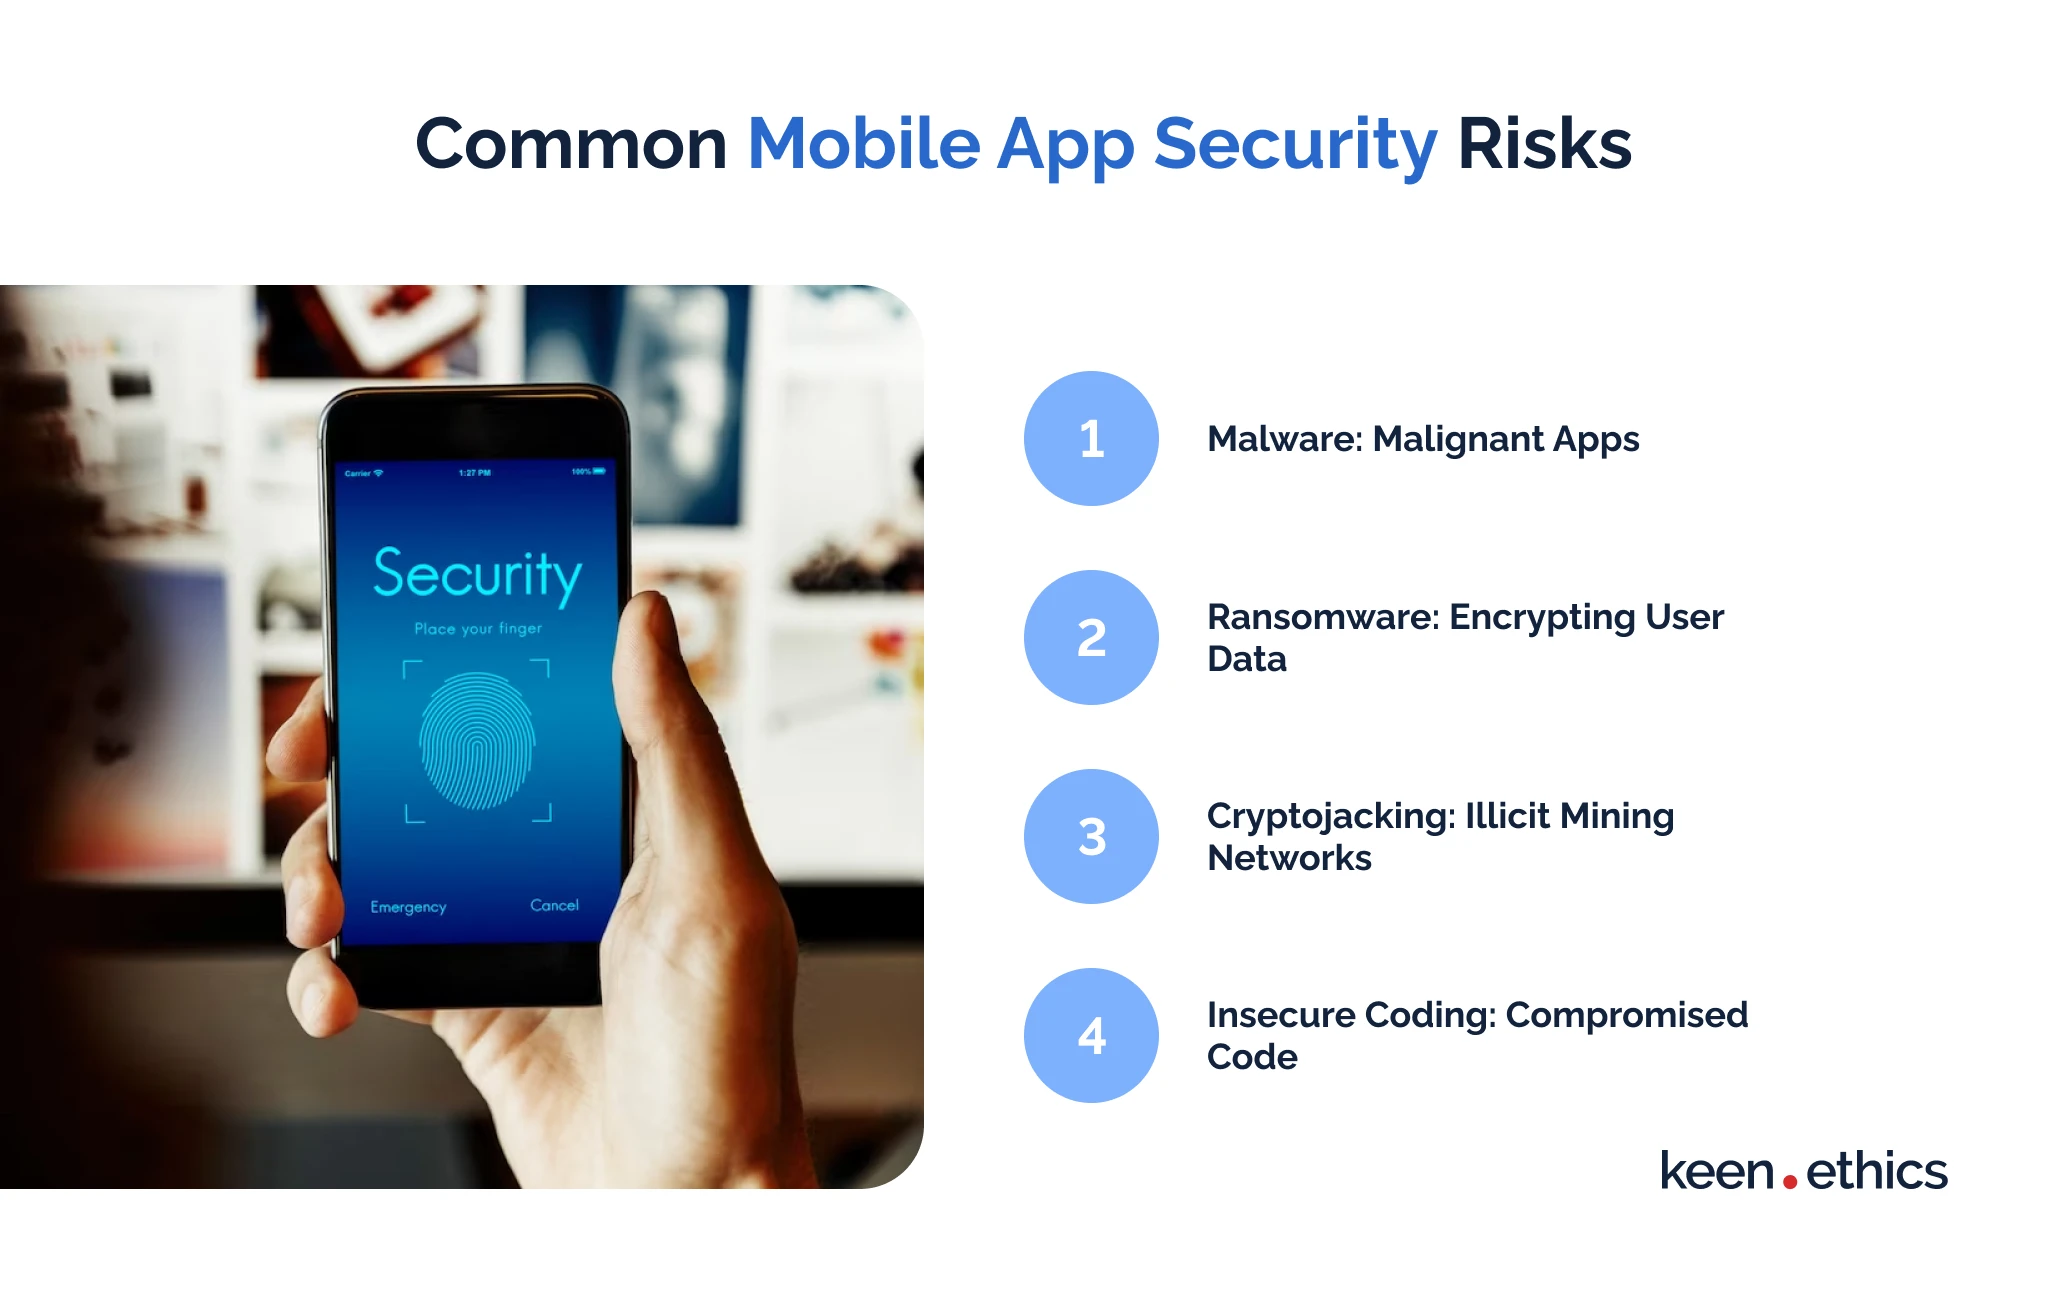 Common mobile app security risks